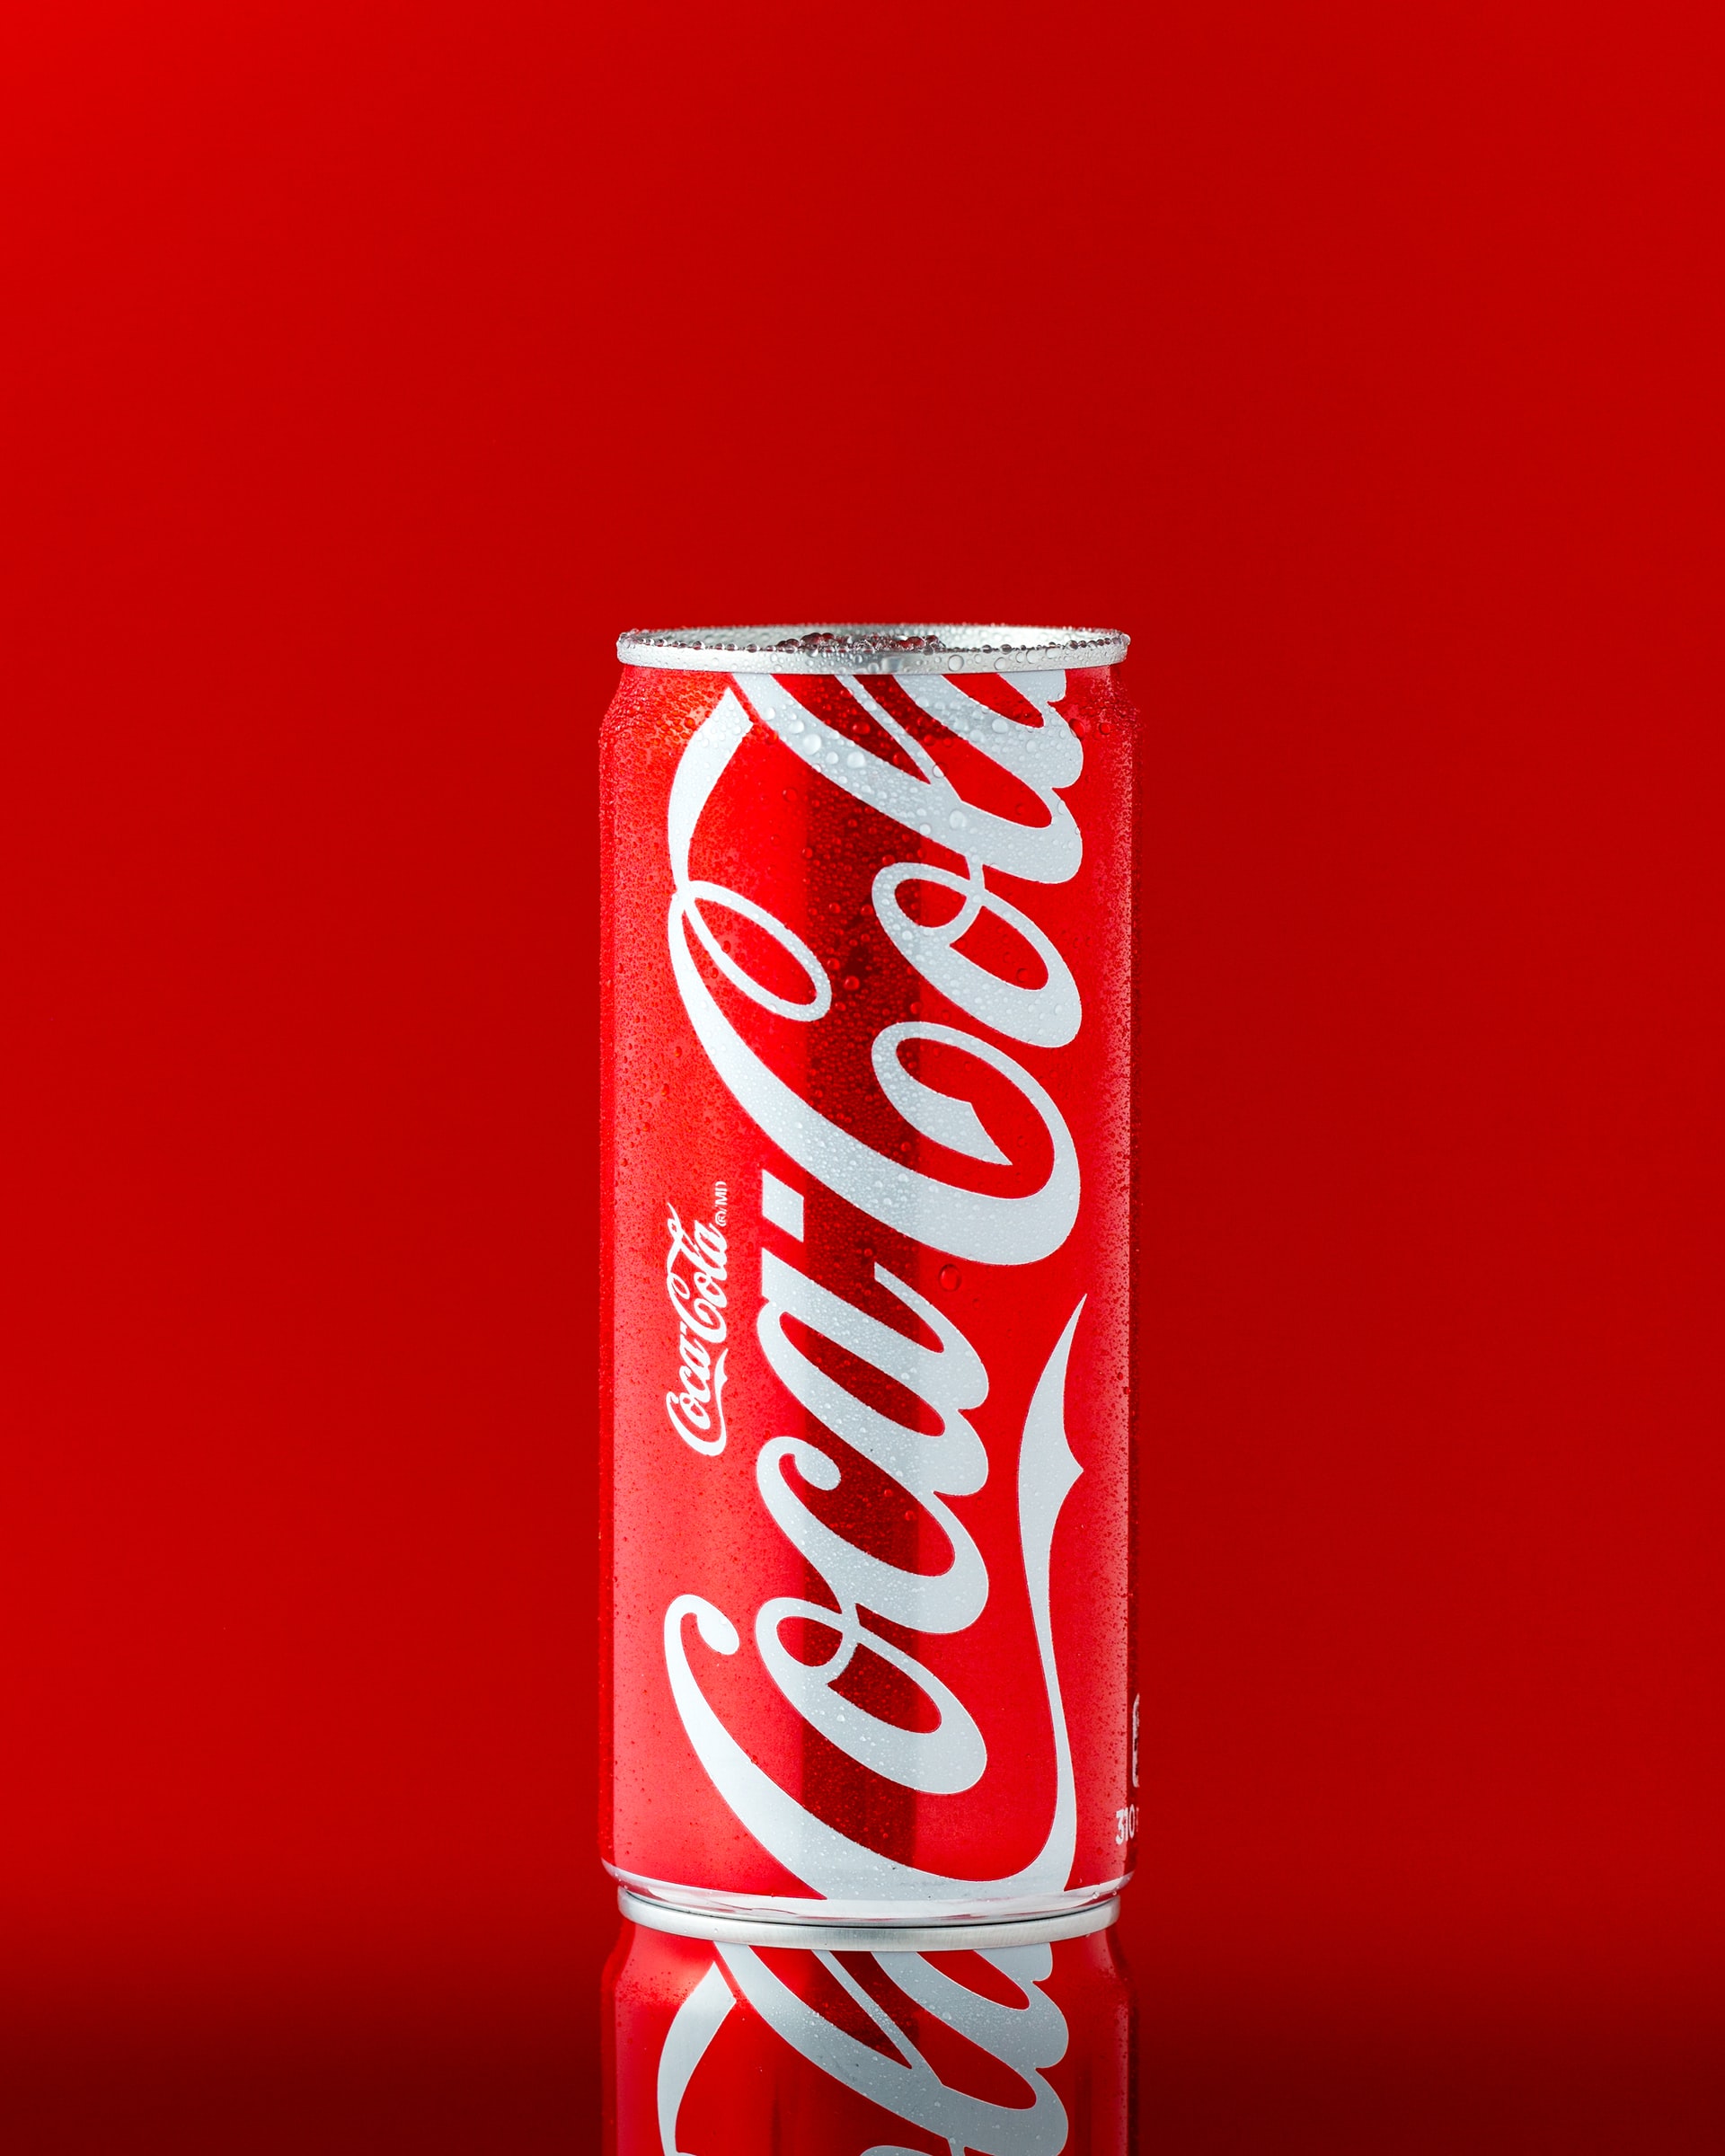 Læs mere om Coca Cola aktier